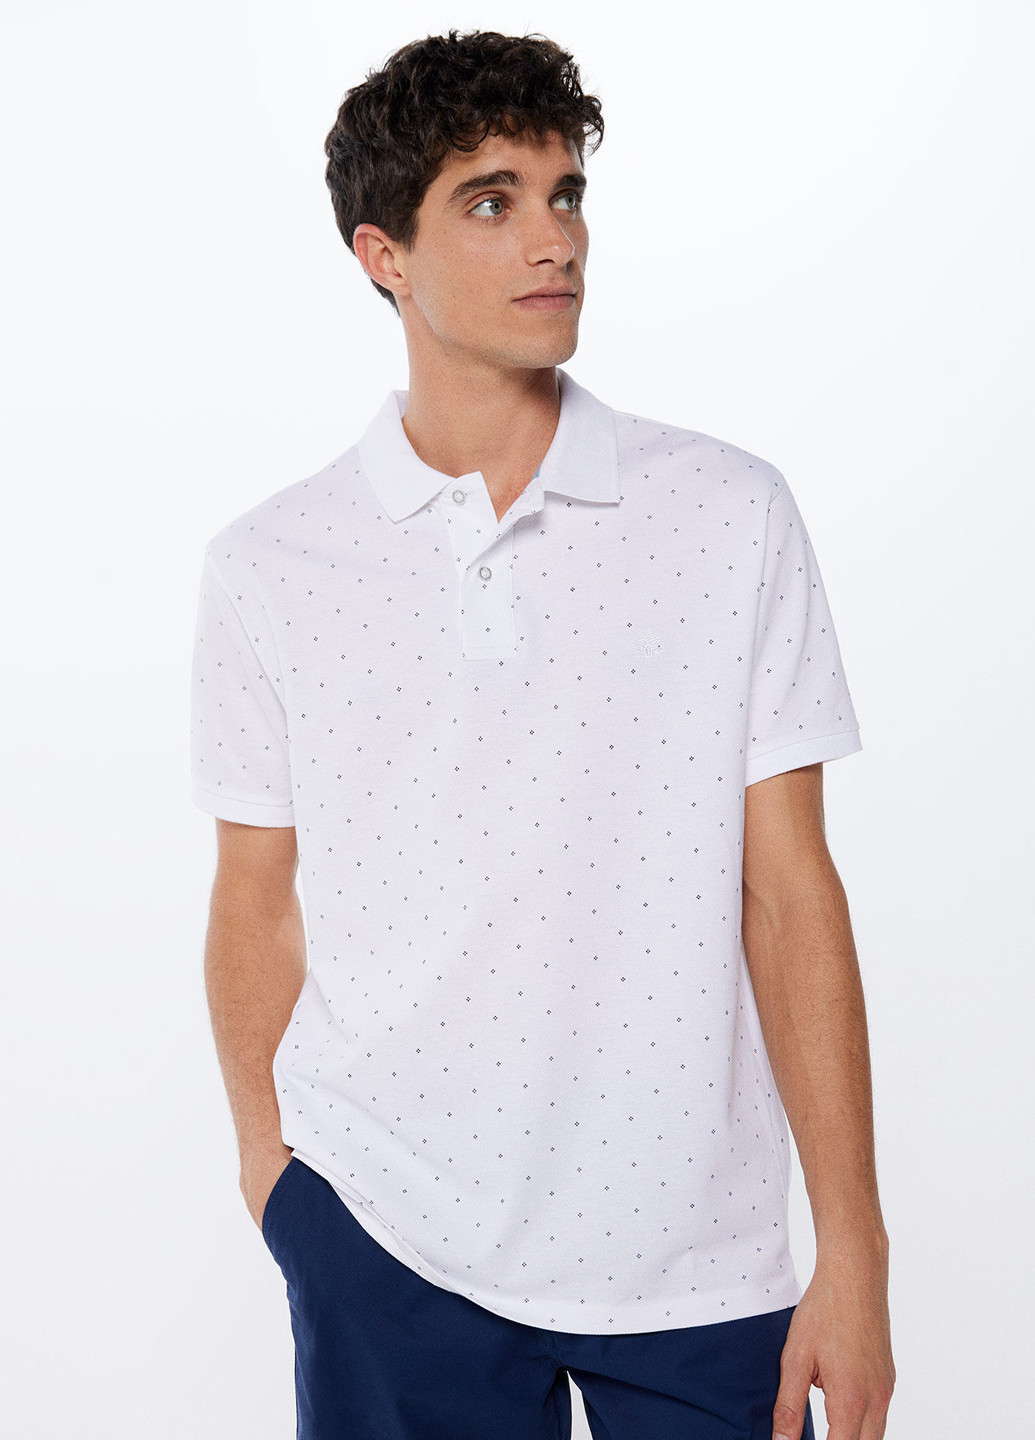 Белая футболка-поло для мужчин Springfield с геометрическим узором